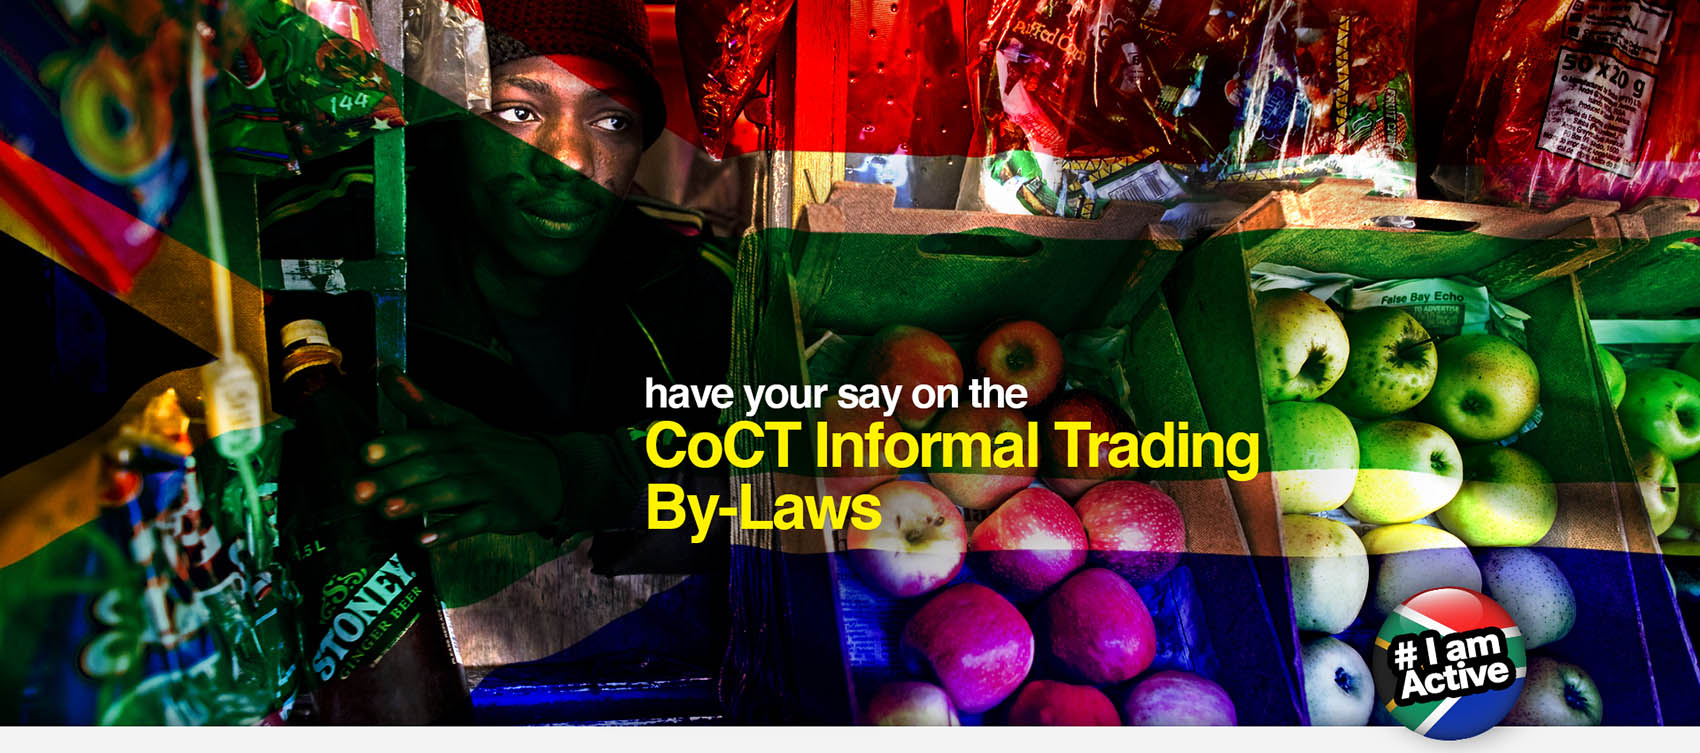 DearSA-CoCT-Informal-Trading